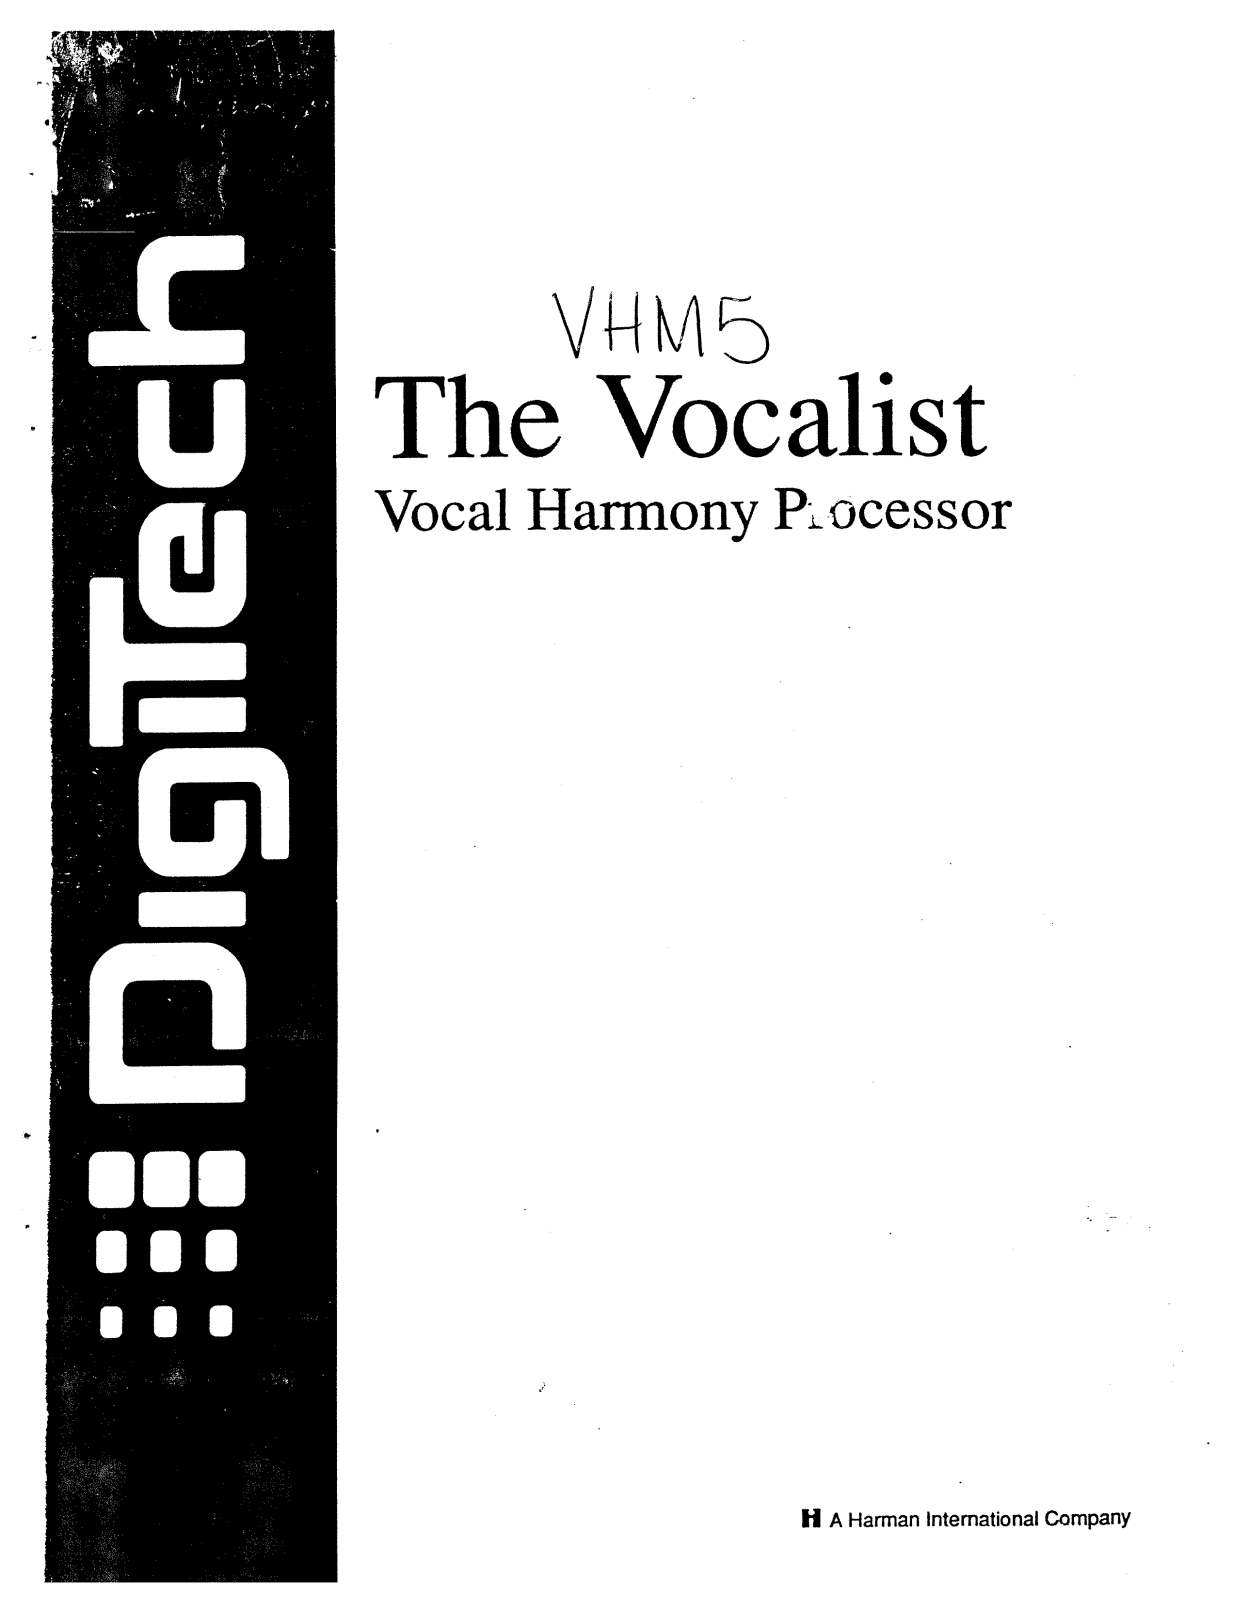 Digitech VHM5 Manual